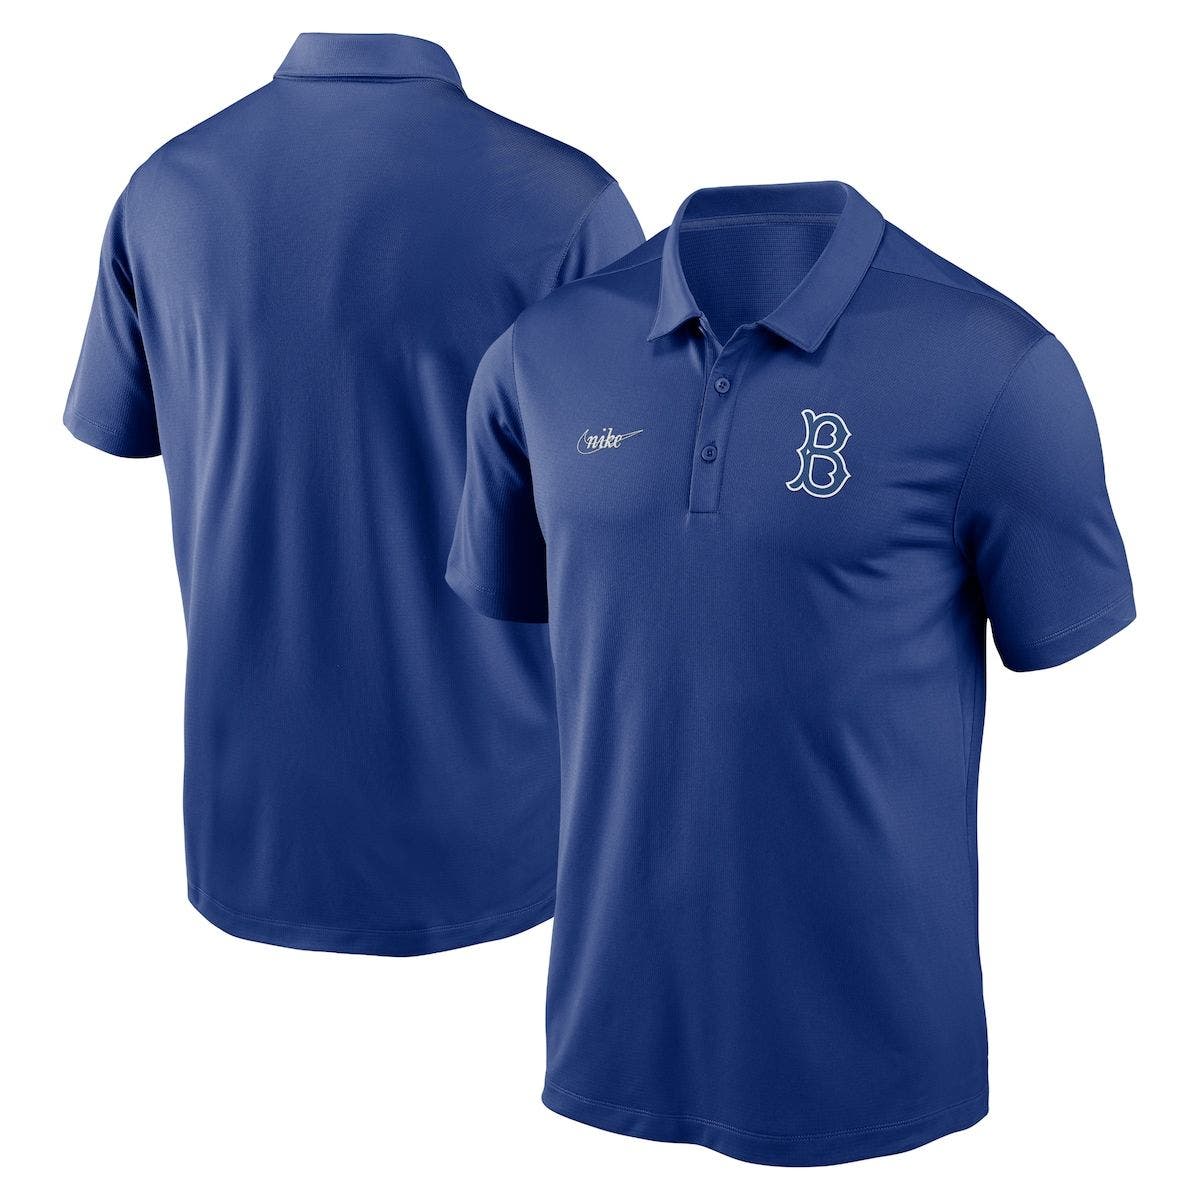 South Carolina USA Flag Half Baseball Mens Short Sleeve Polo Shirt Regular Blouse Sport Tee